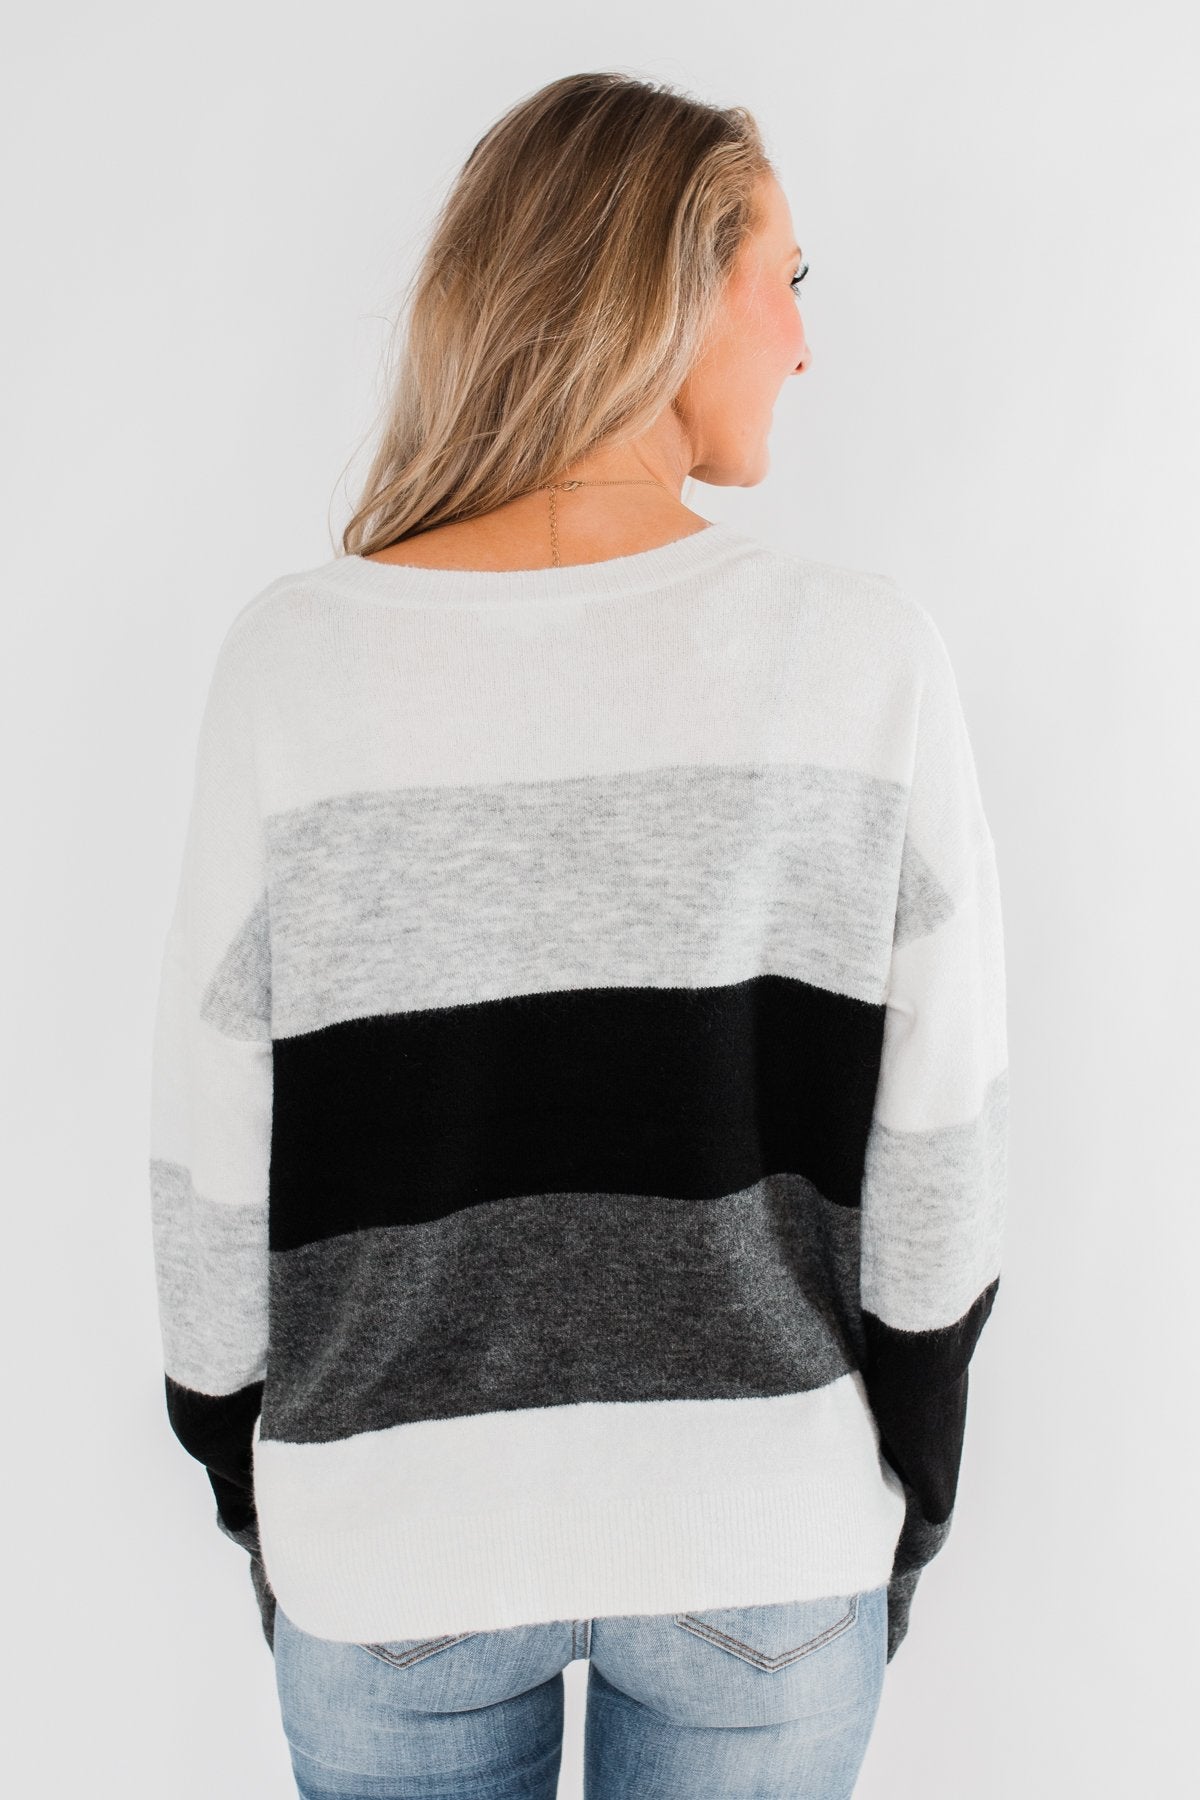 Mountain Getaway Color Block Sweater- Onyx Tones